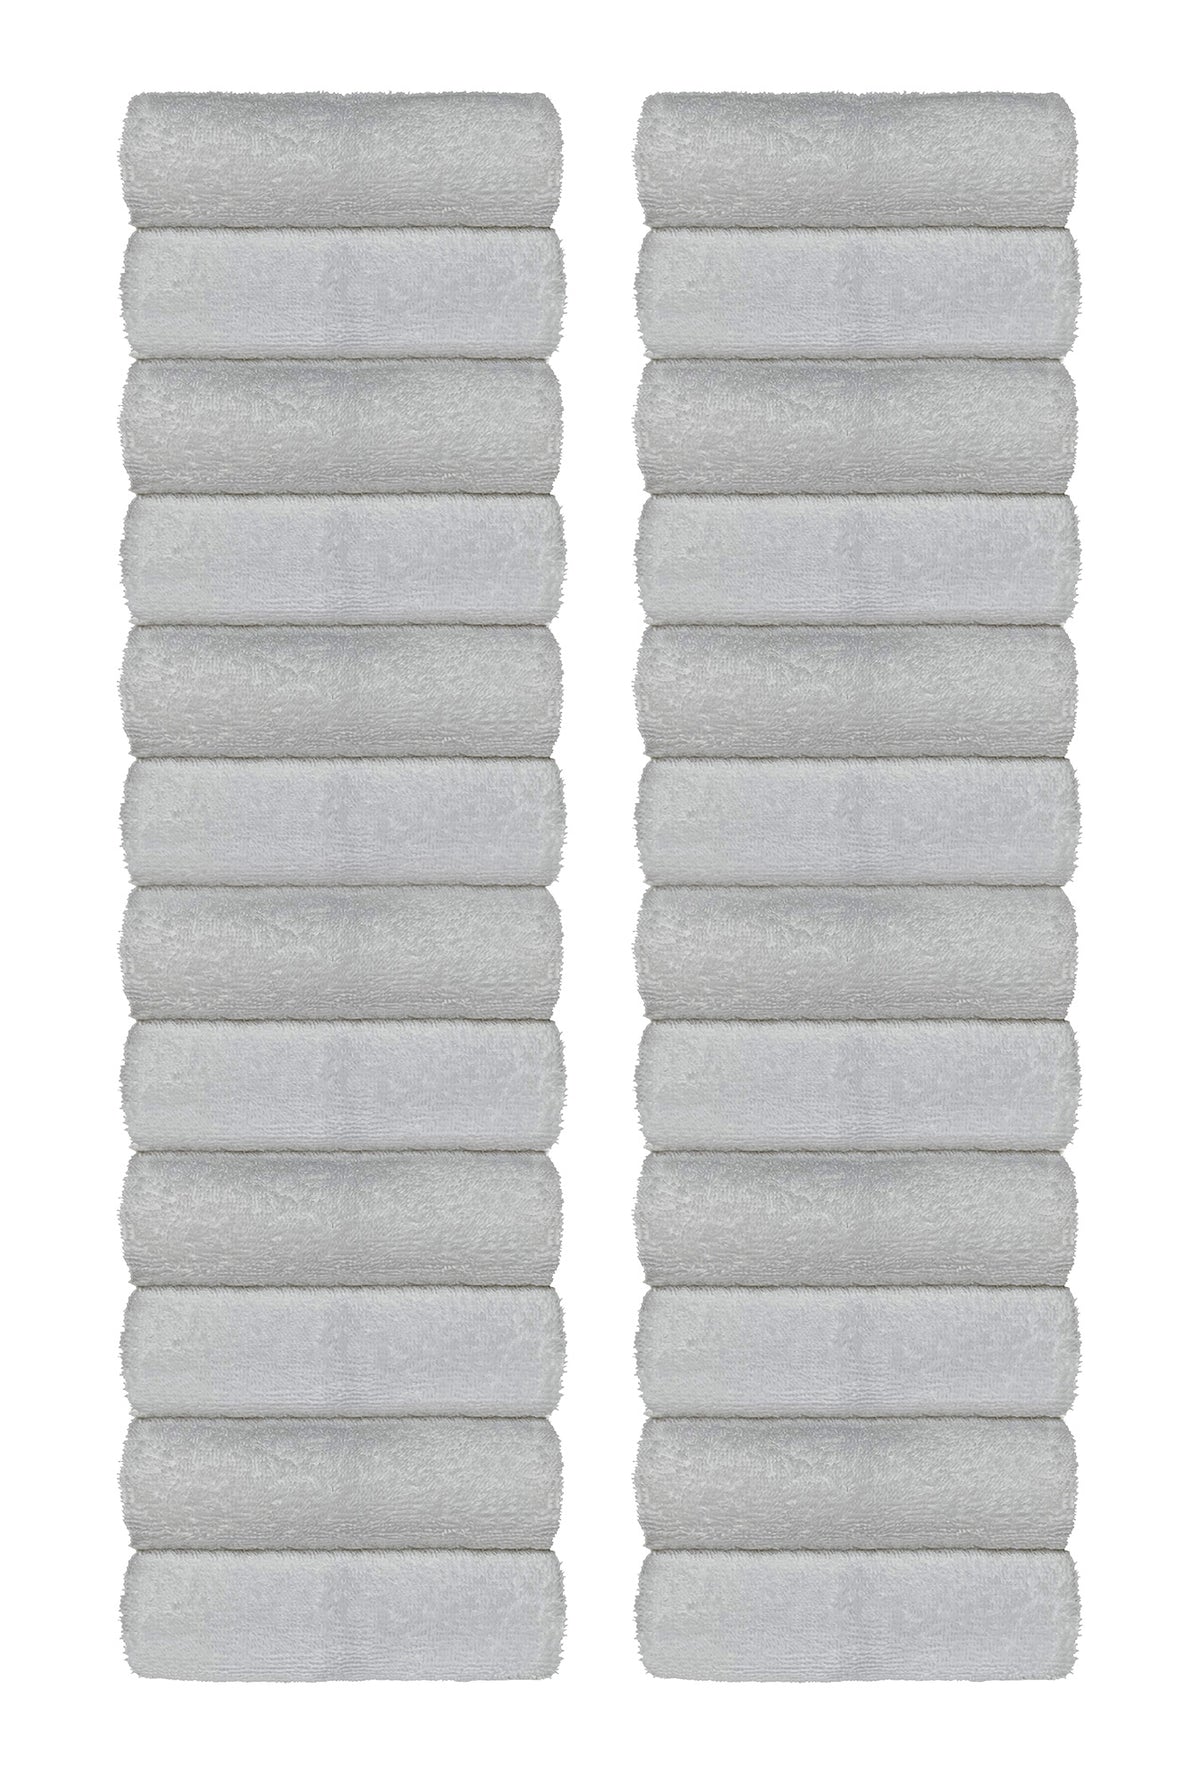 Set Asciugamani Bagno 100% Cotone Super Assorbenti Telo Doccia Spugna Professionali Salvietta Lavetta Viso Asciugamano Teli Asciugamano -Grigio Chiaro